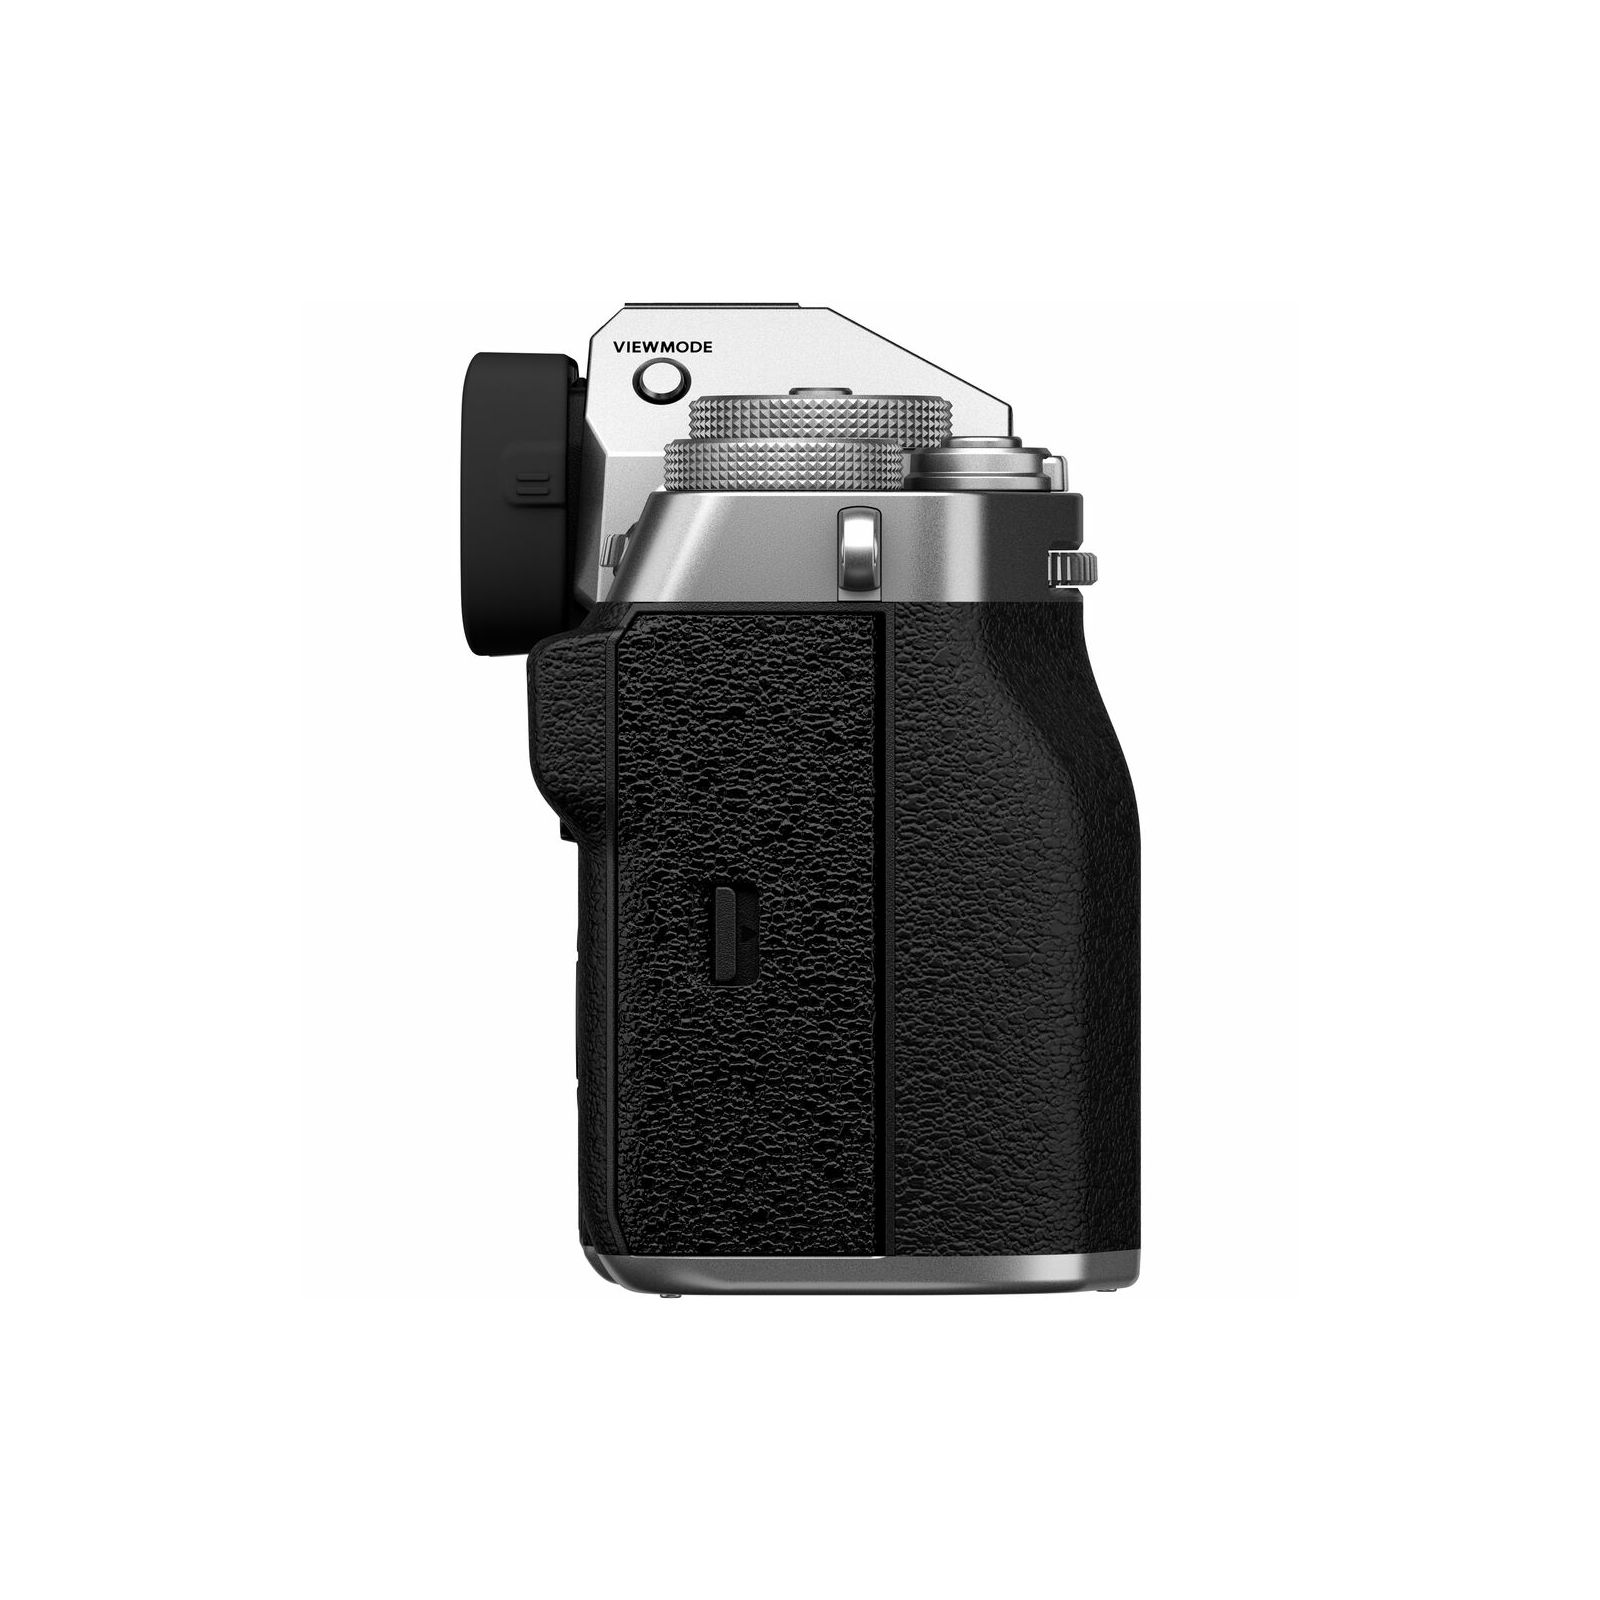 Fujifilm X-T5 Body Silver Fuji digitalni mirrorless fotoaparat